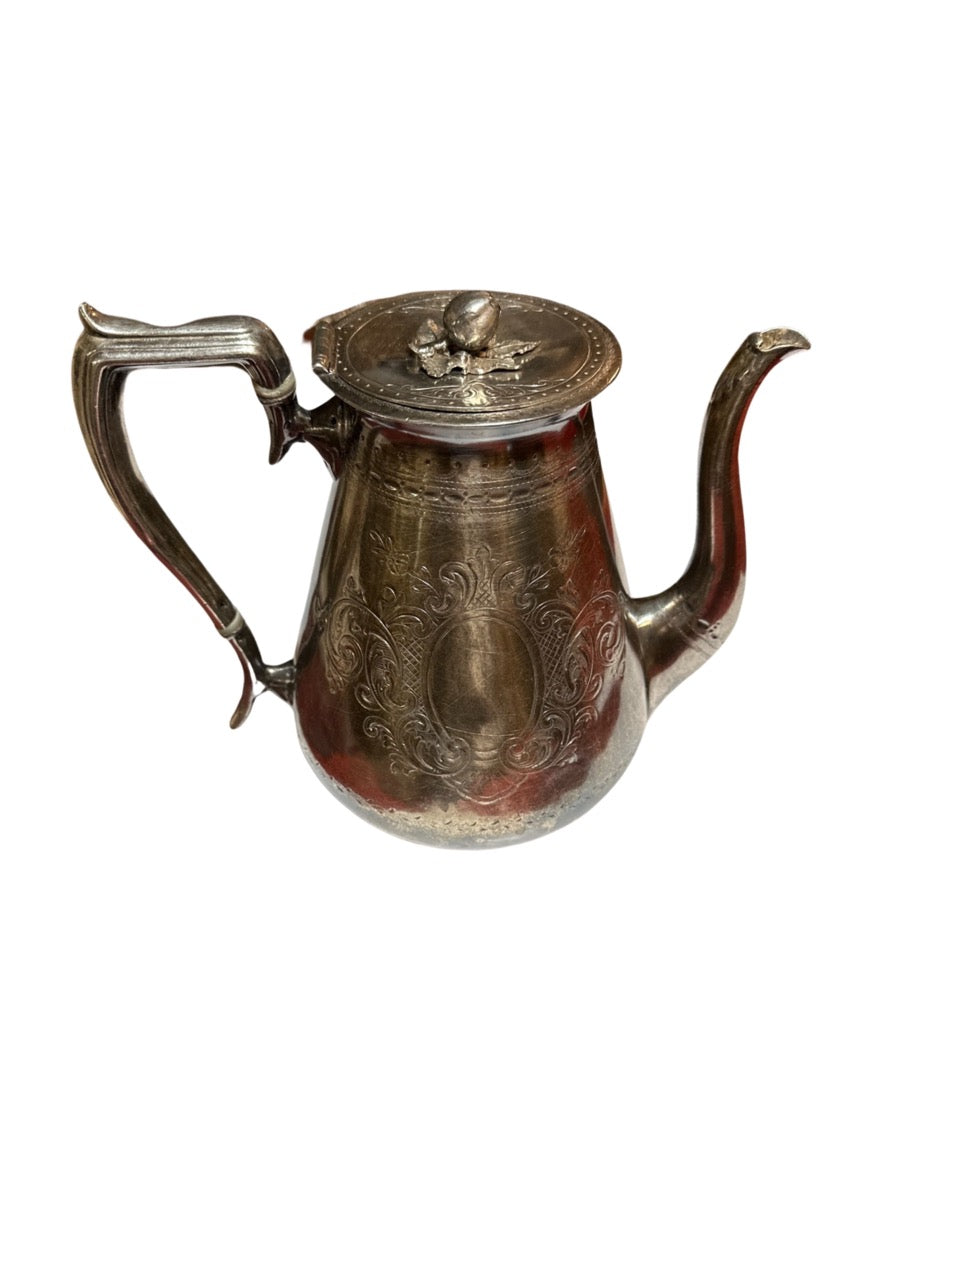 Antique Silverplated Tea / Coffee Pot